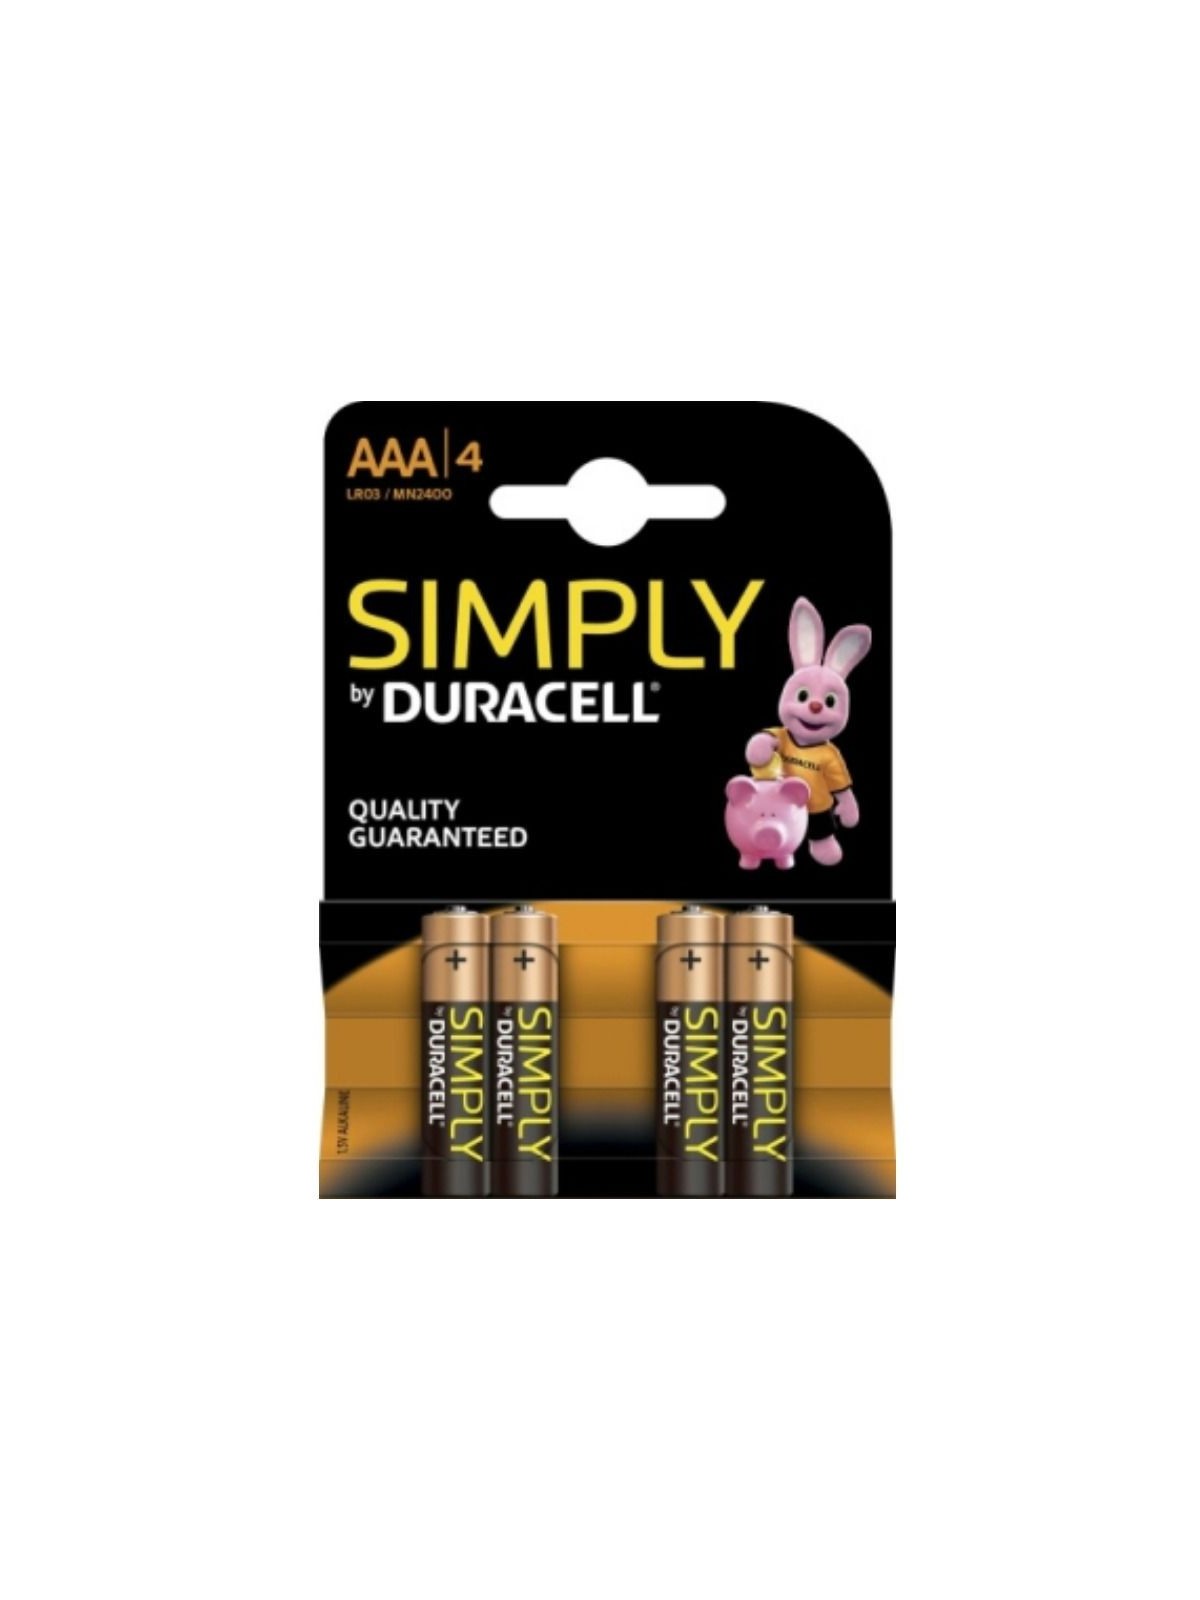 Duracell Simply Pila Alcalina AAA LR03/MN2400 4 Uds - Comprar Pilas y baterías Duracell - Pilas & baterías (1)